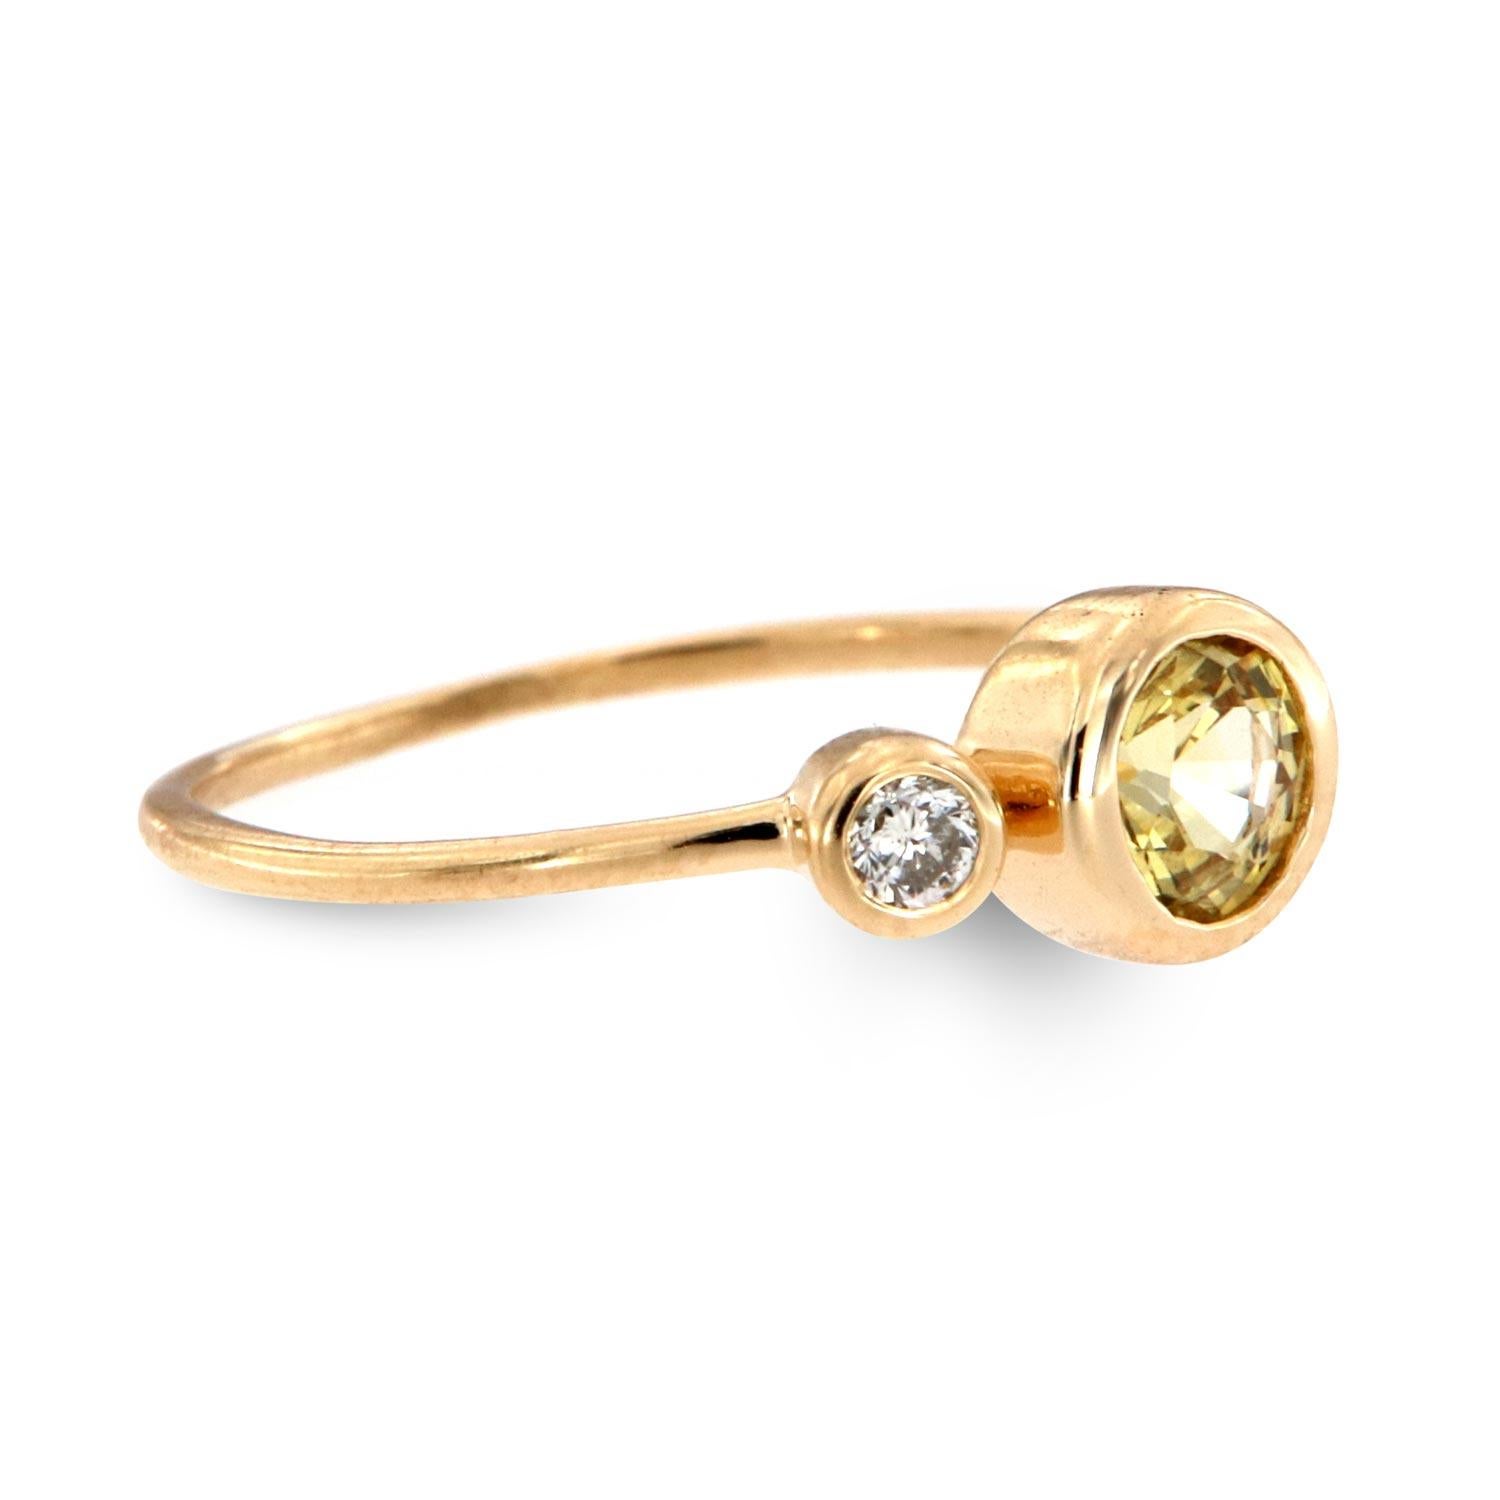 5 carat yellow sapphire ring